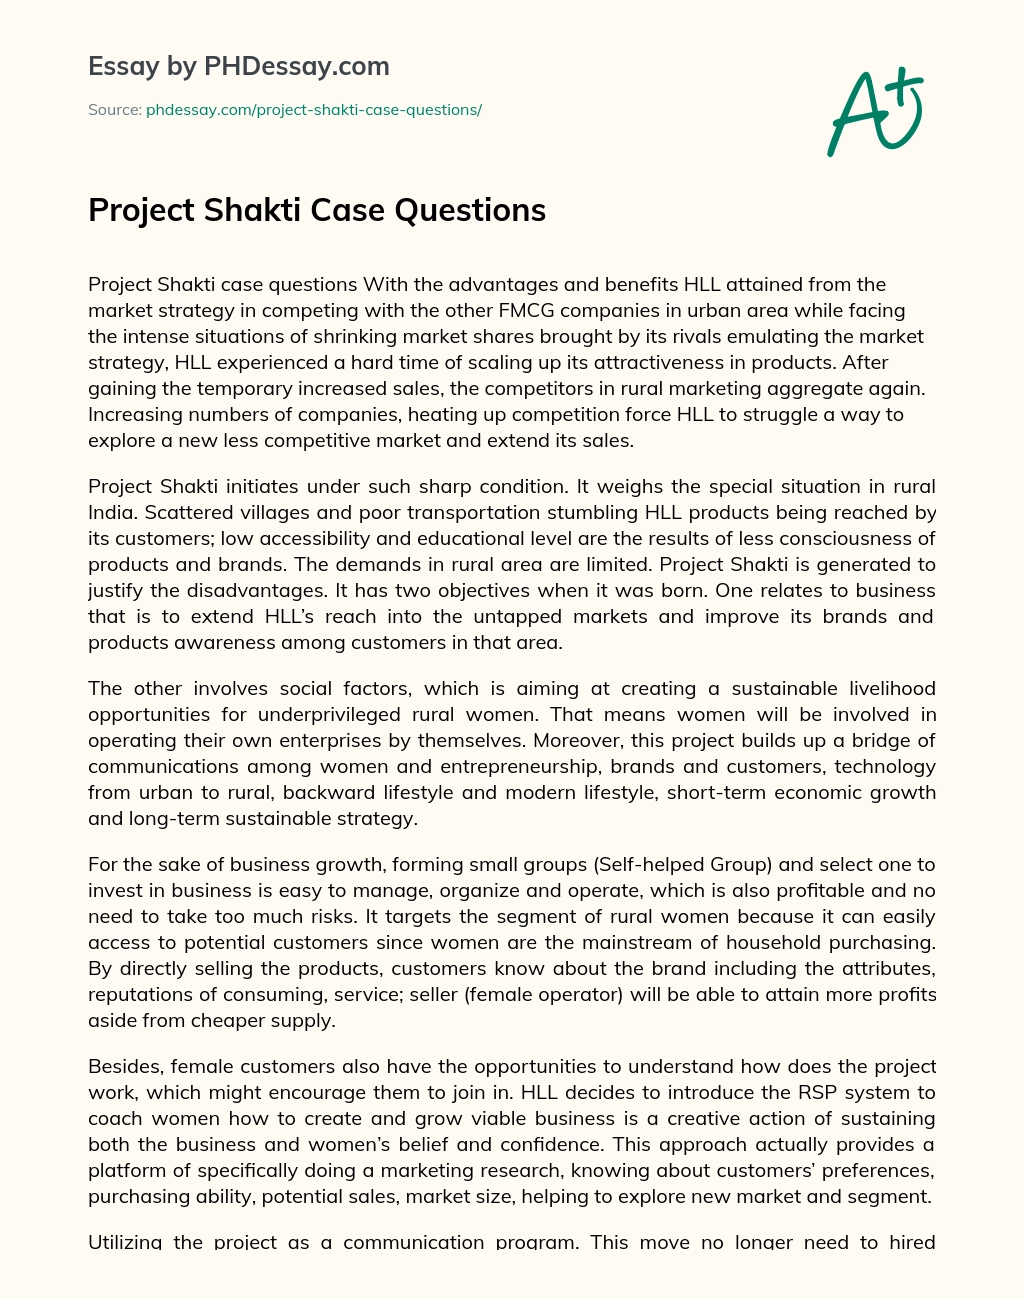 Project Shakti Case Questions essay